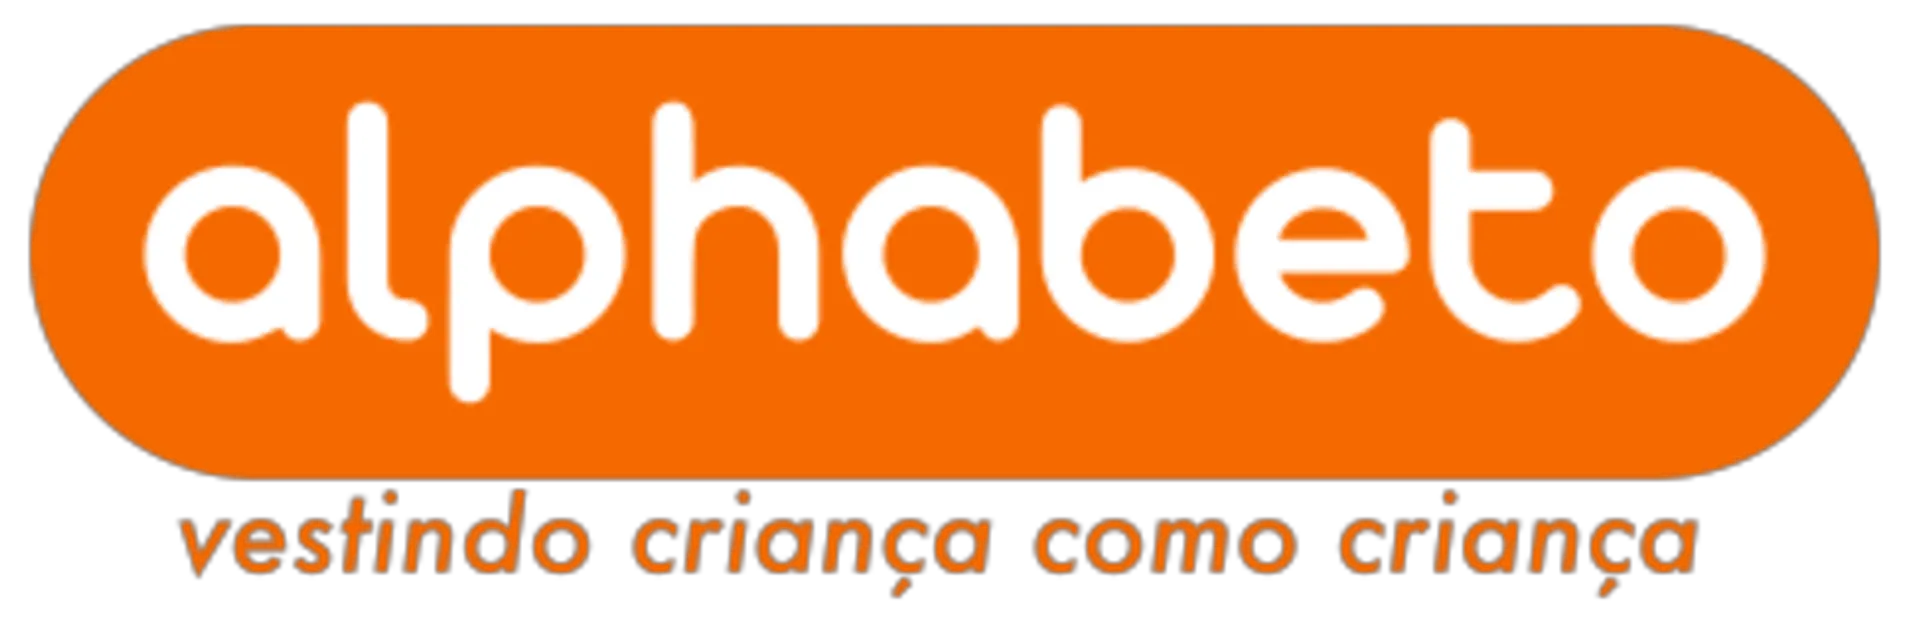 ALPHABETO logo